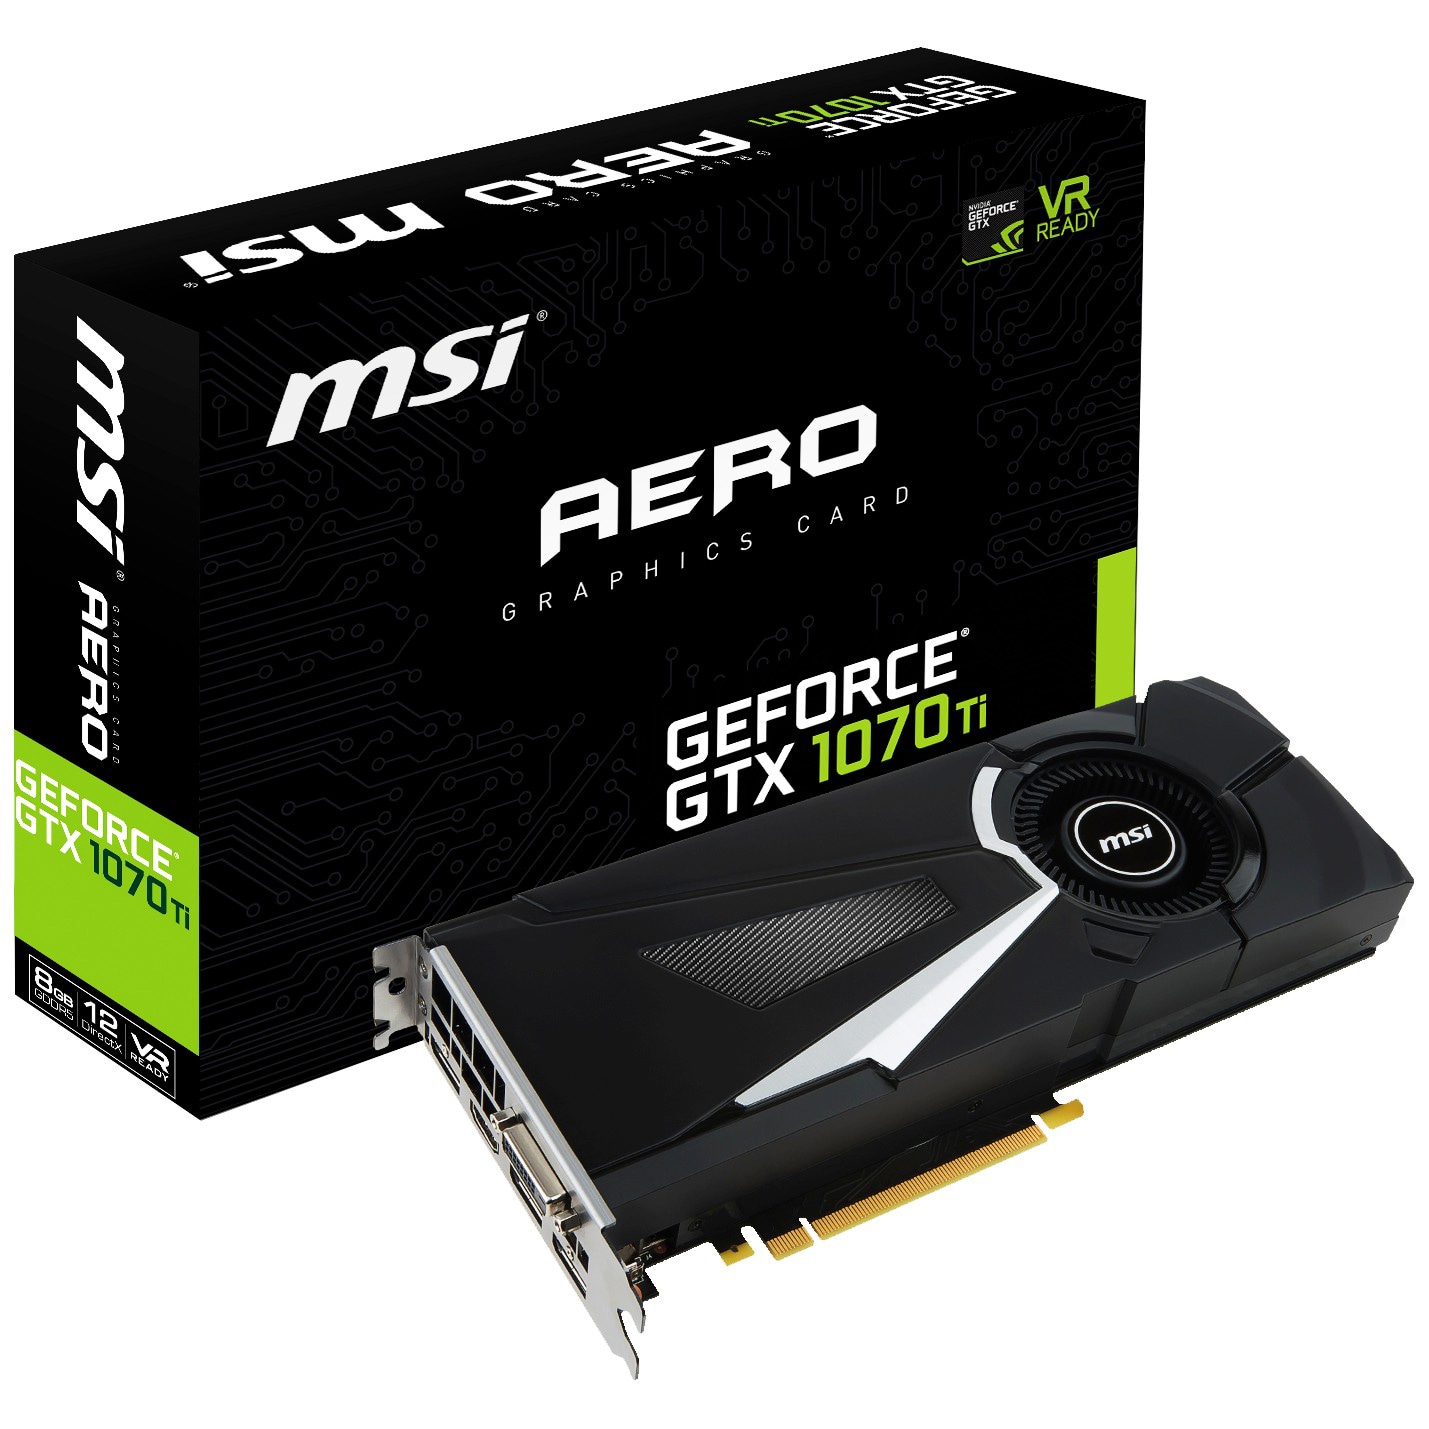 MSI GeForce GTX 1070 Ti Aero grafikkort (8 GB) - Elkjøp